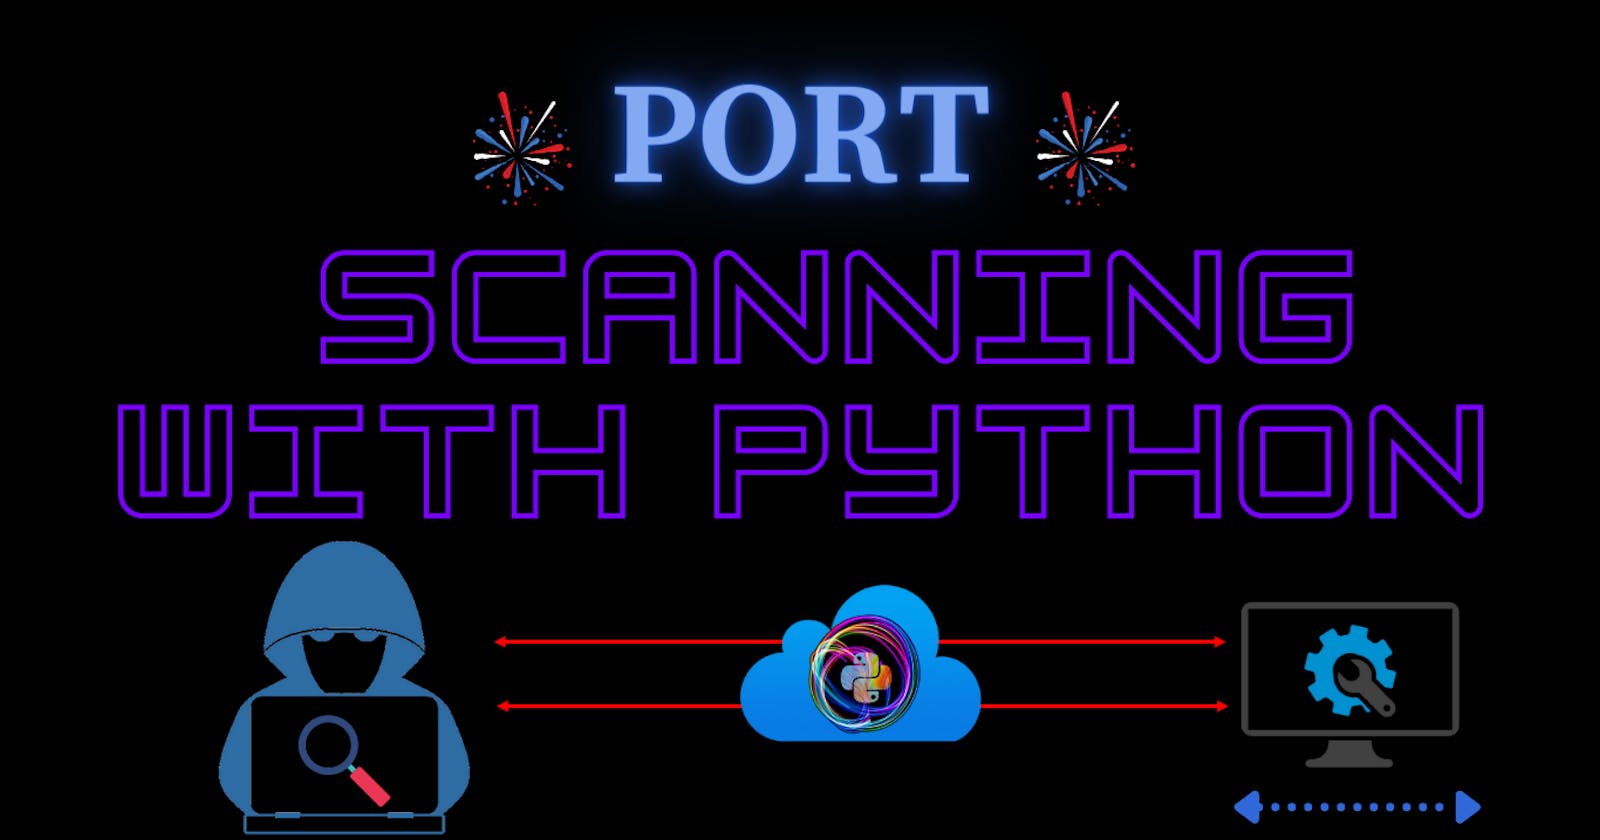 Port Scanning With Python